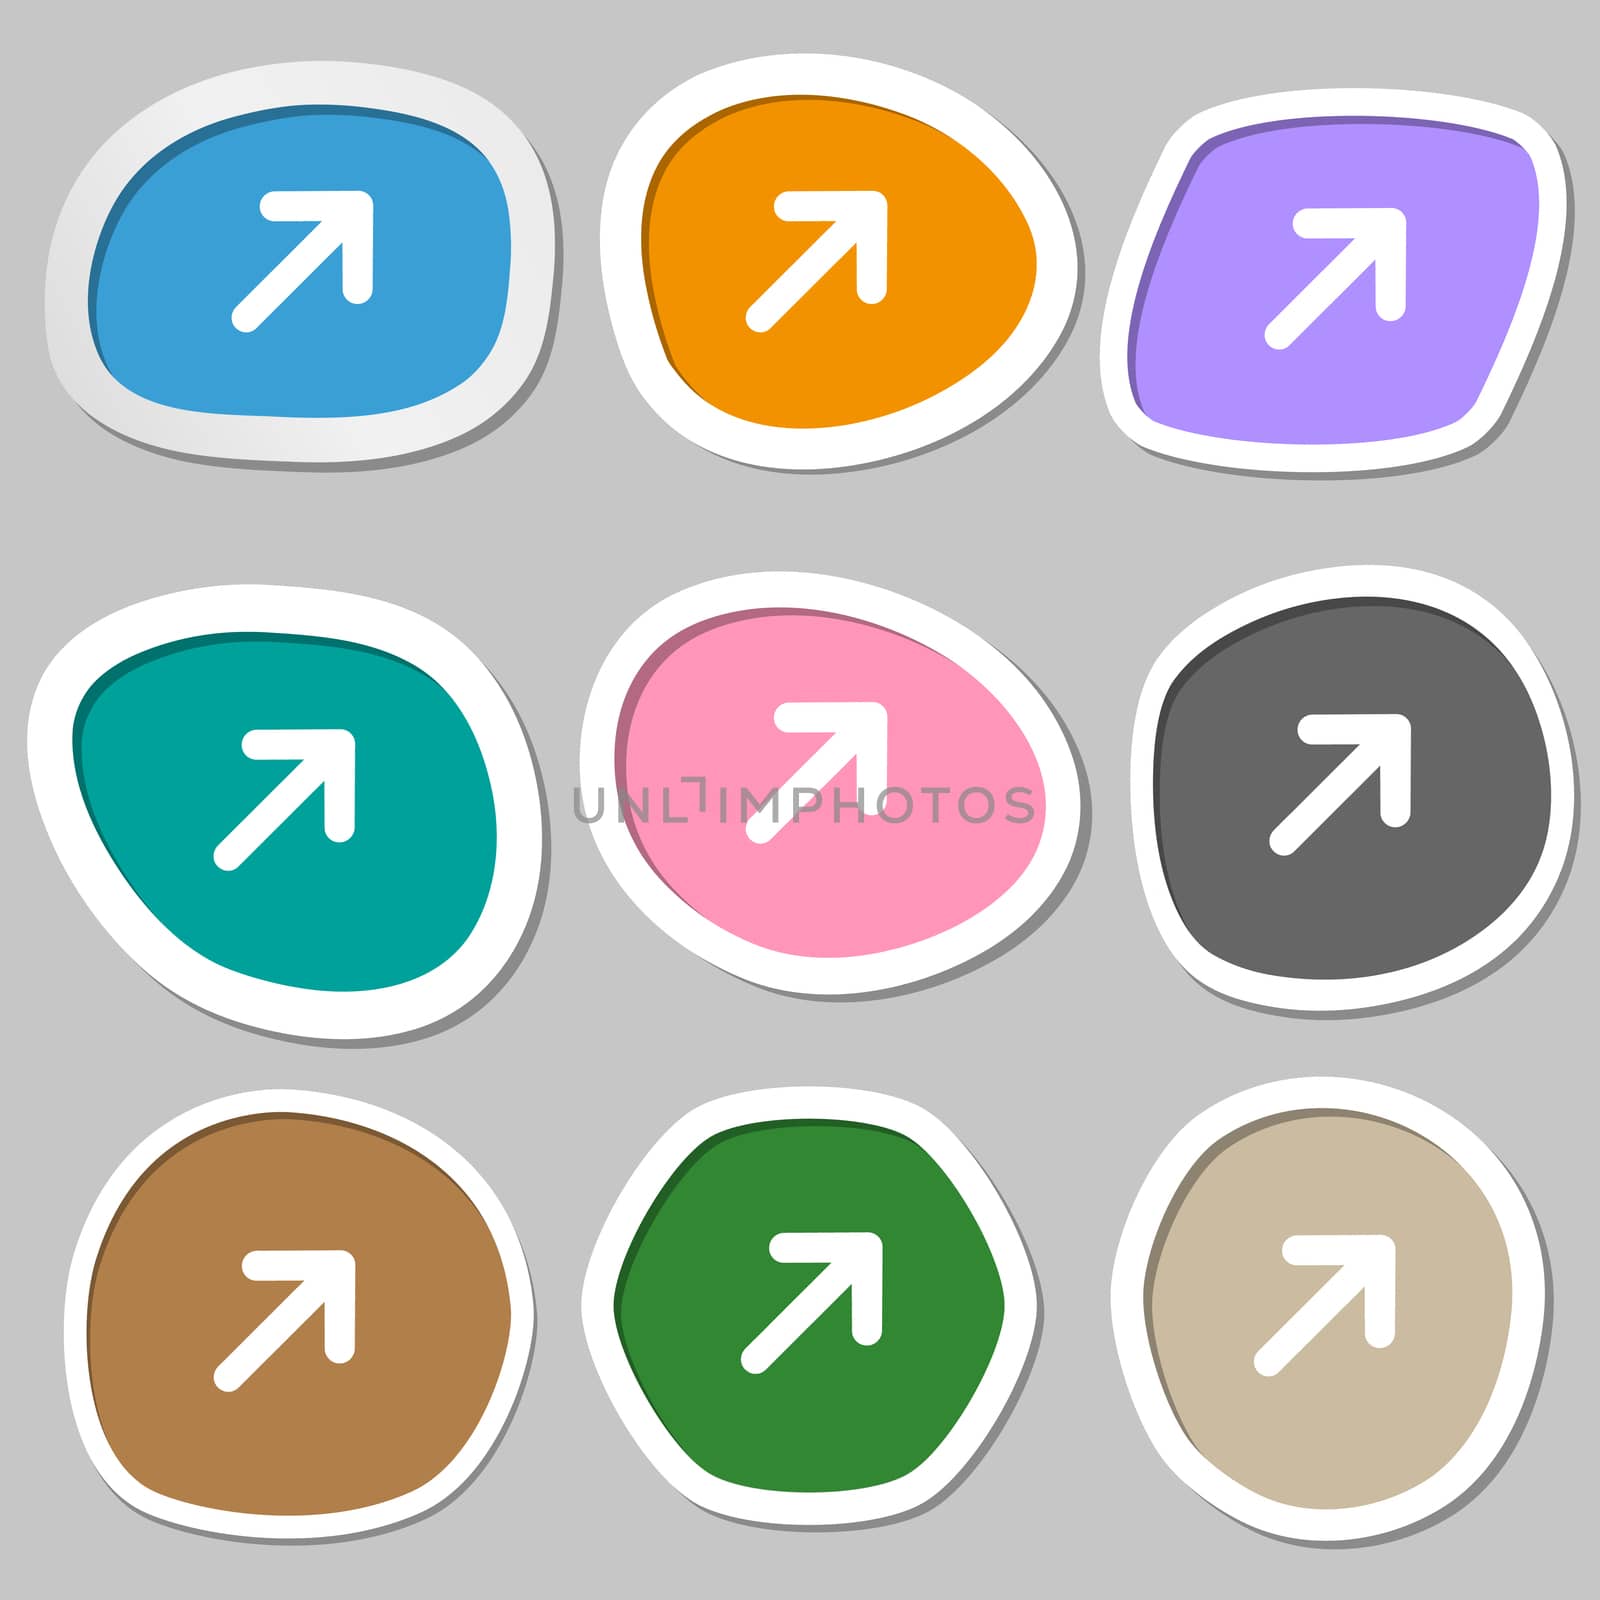 Arrow Expand Full screen Scale icon symbols. Multicolored paper stickers. illustration